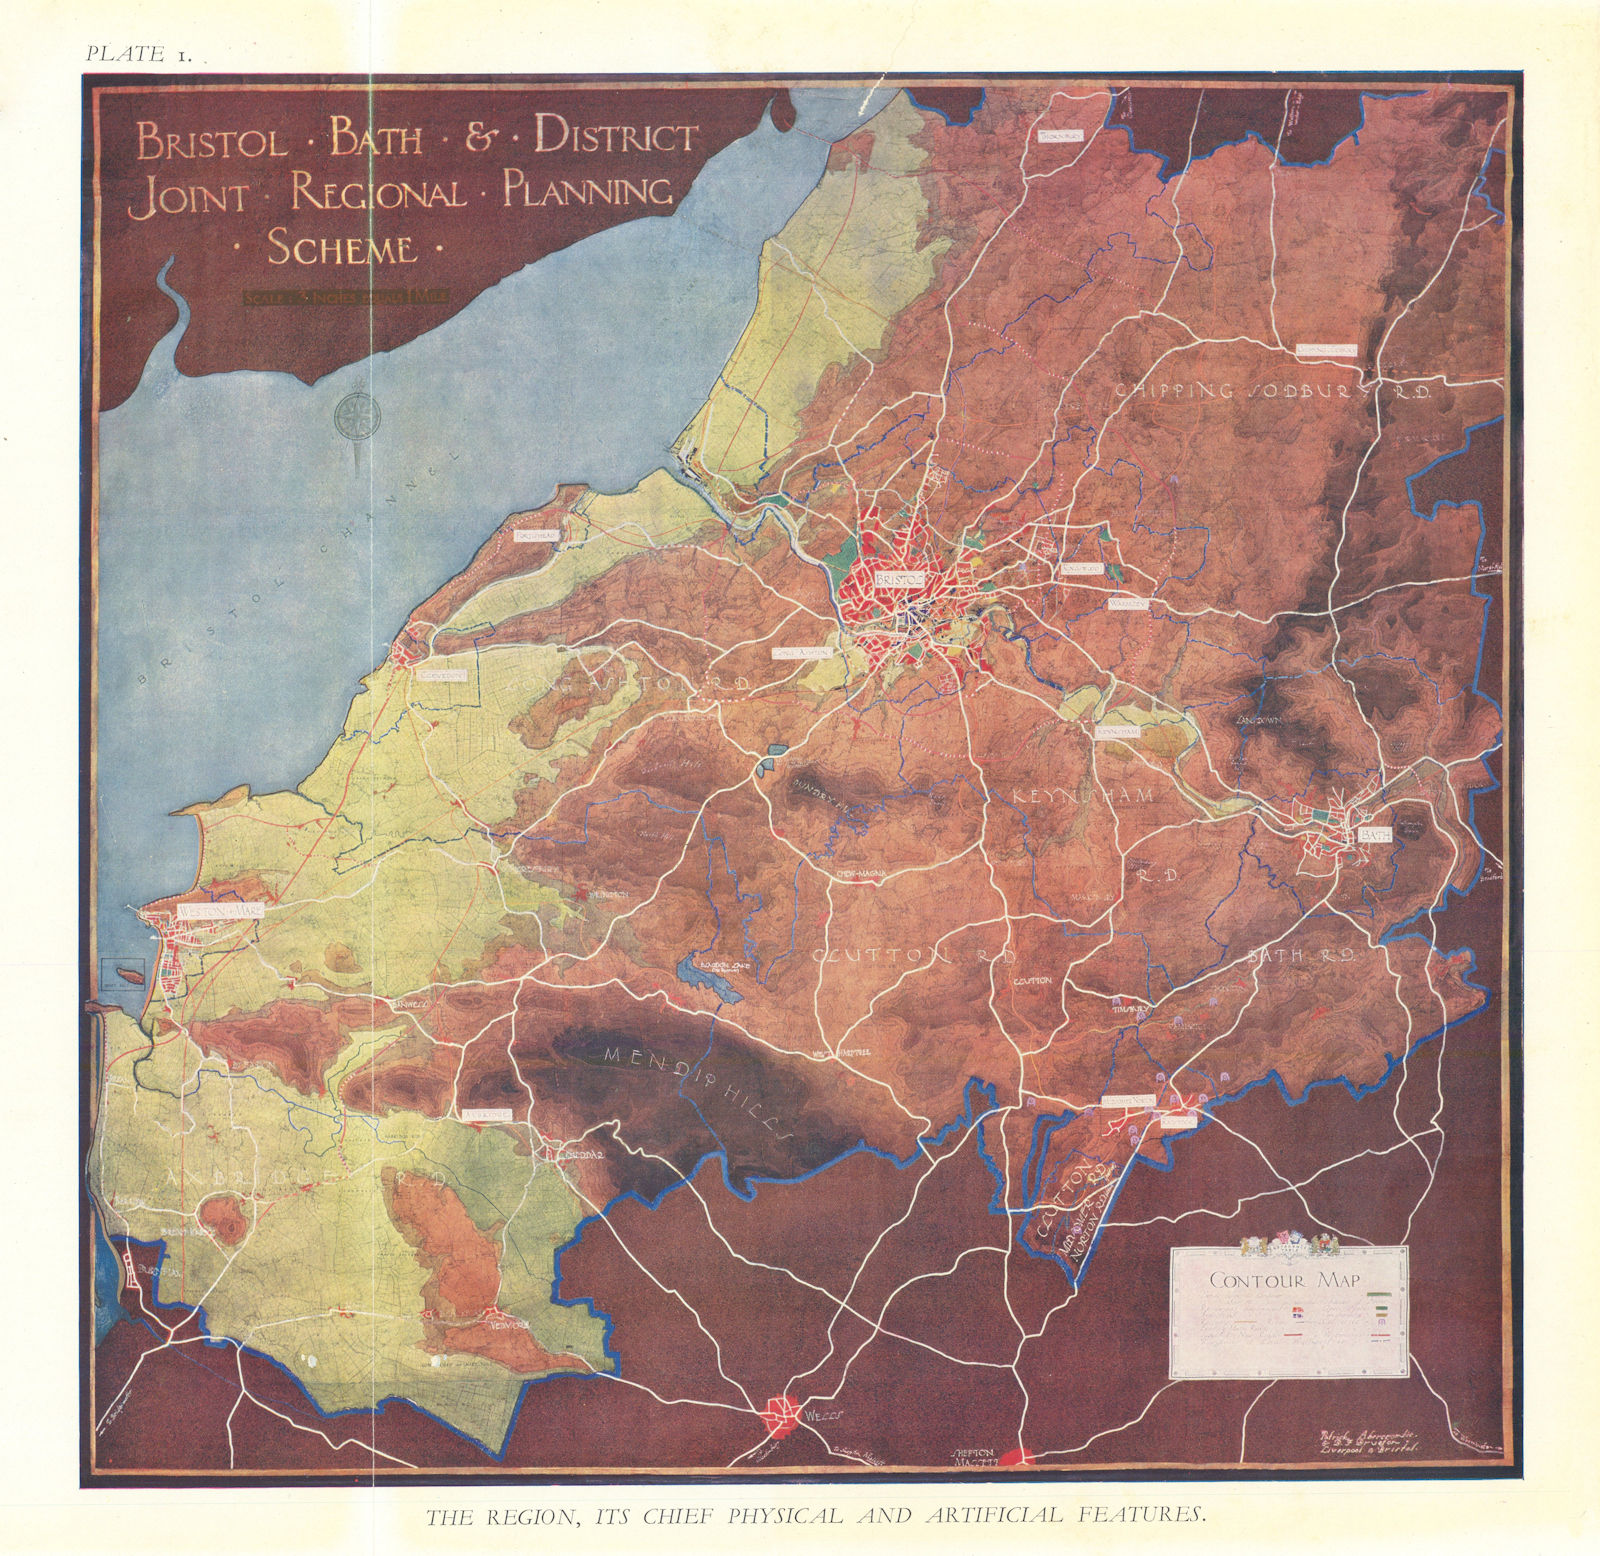 Bristol & Bath Regional Planning Scheme. Contour map. ABERCROMBIE 1930 old